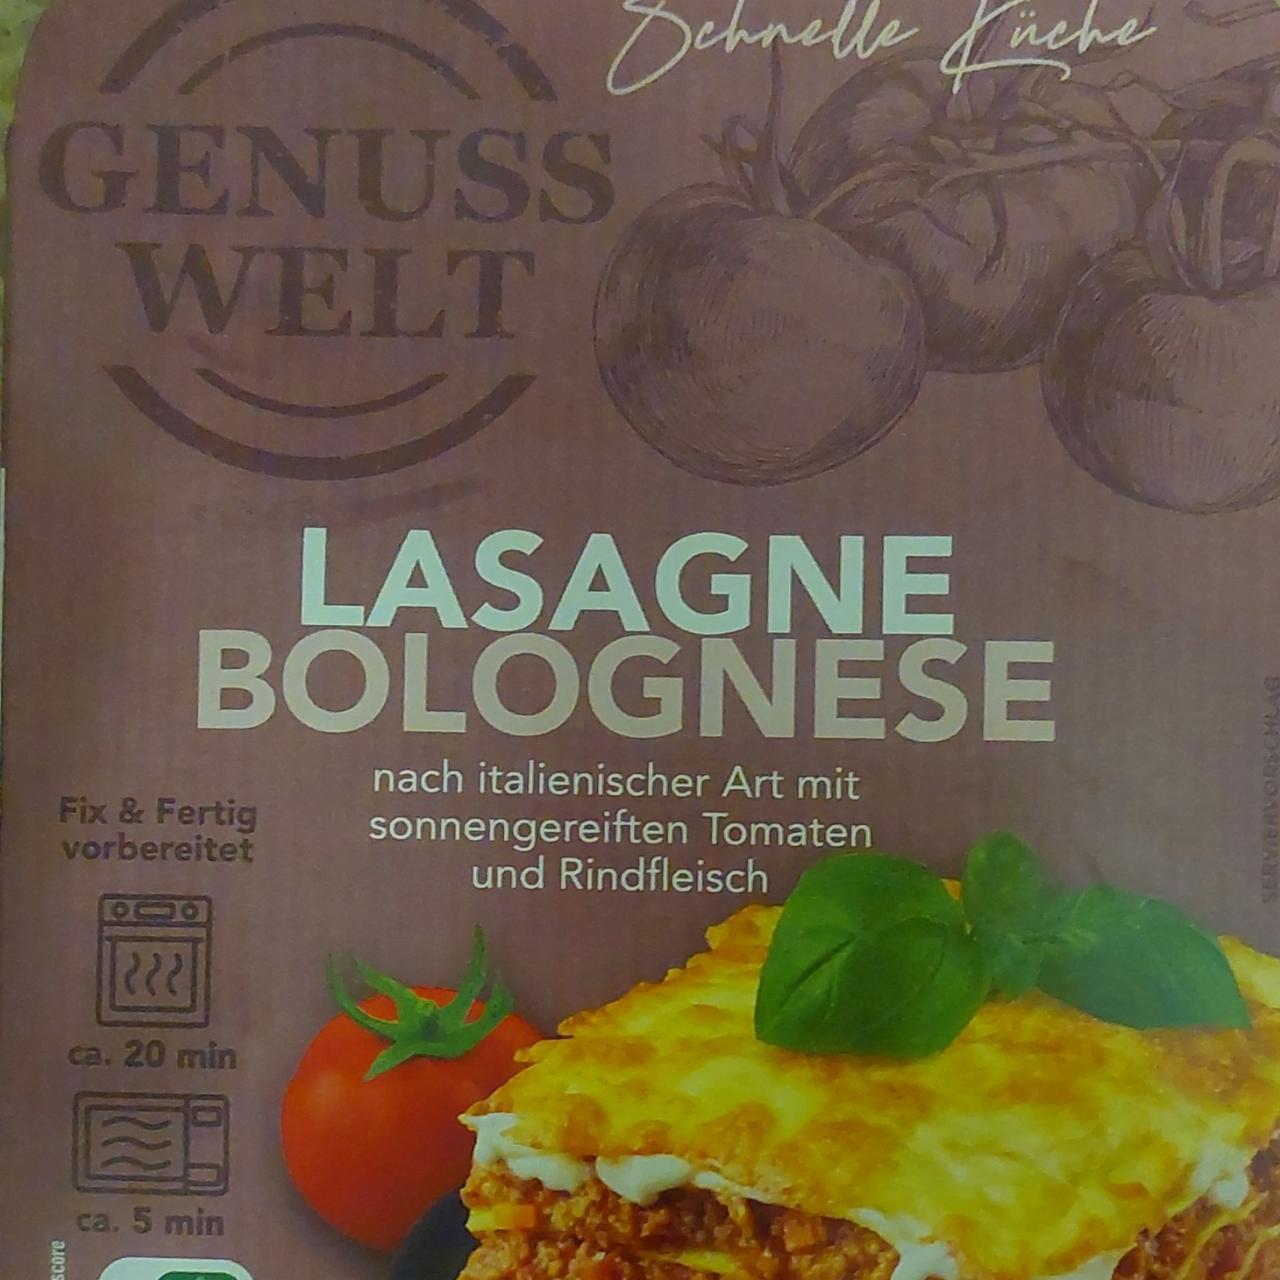 Fotografie - Lasagne bolognese Genuss Welt